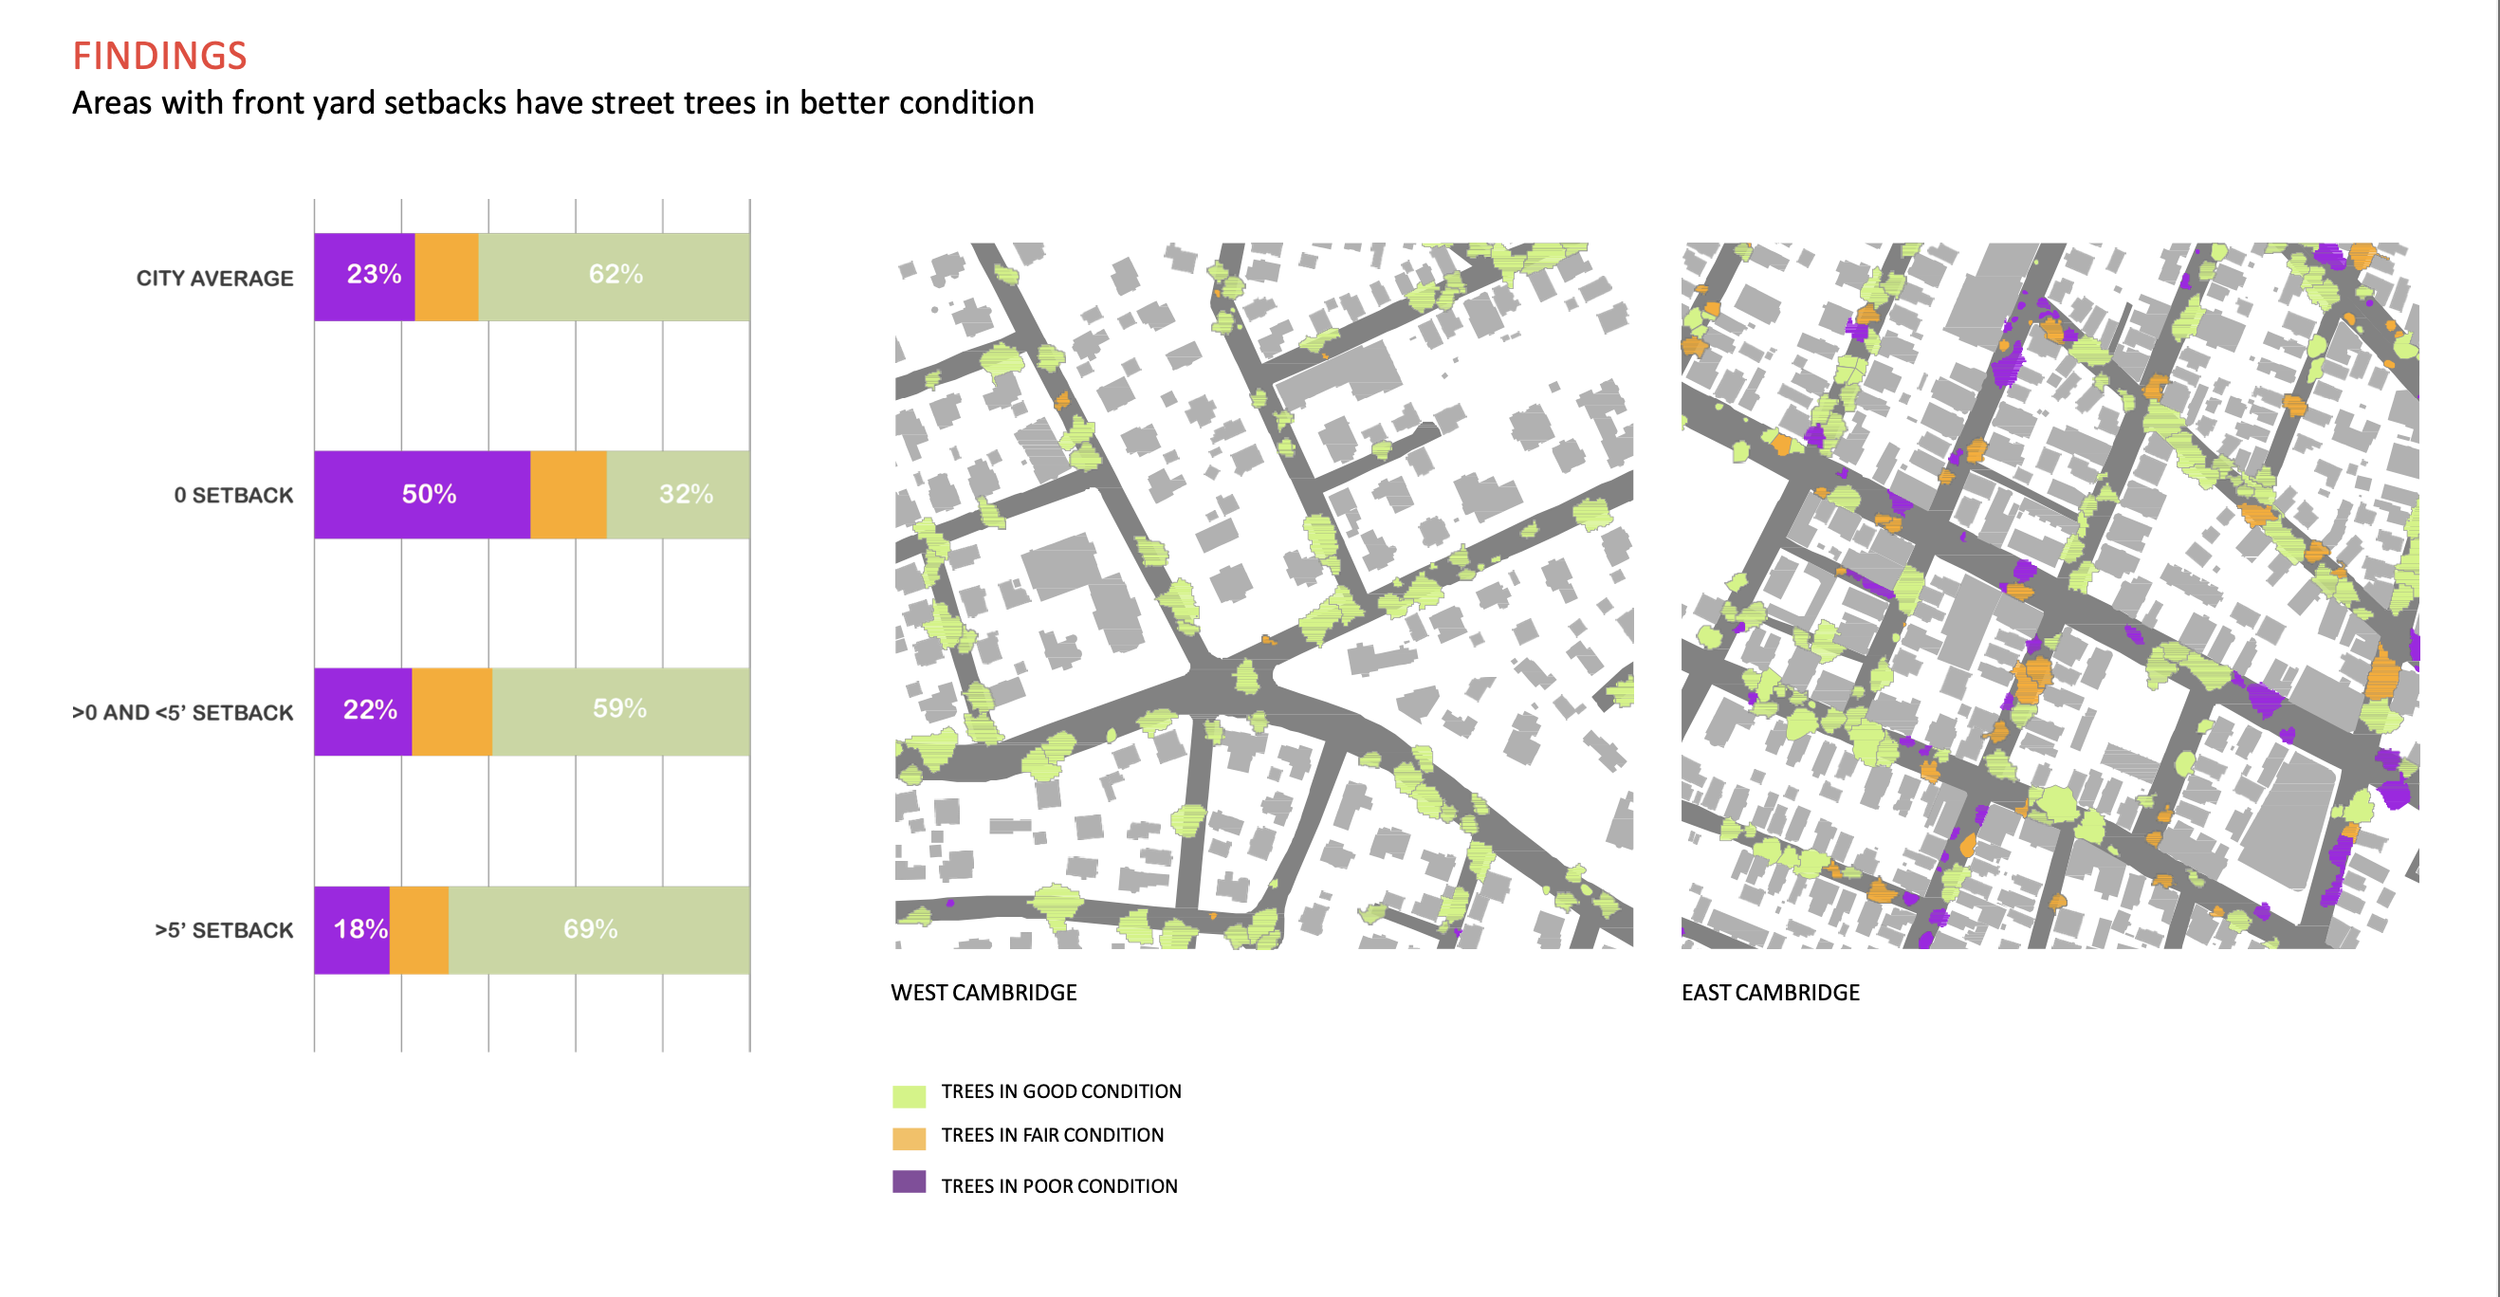 Urban Forest Master Plan - City of Cambridge, MA